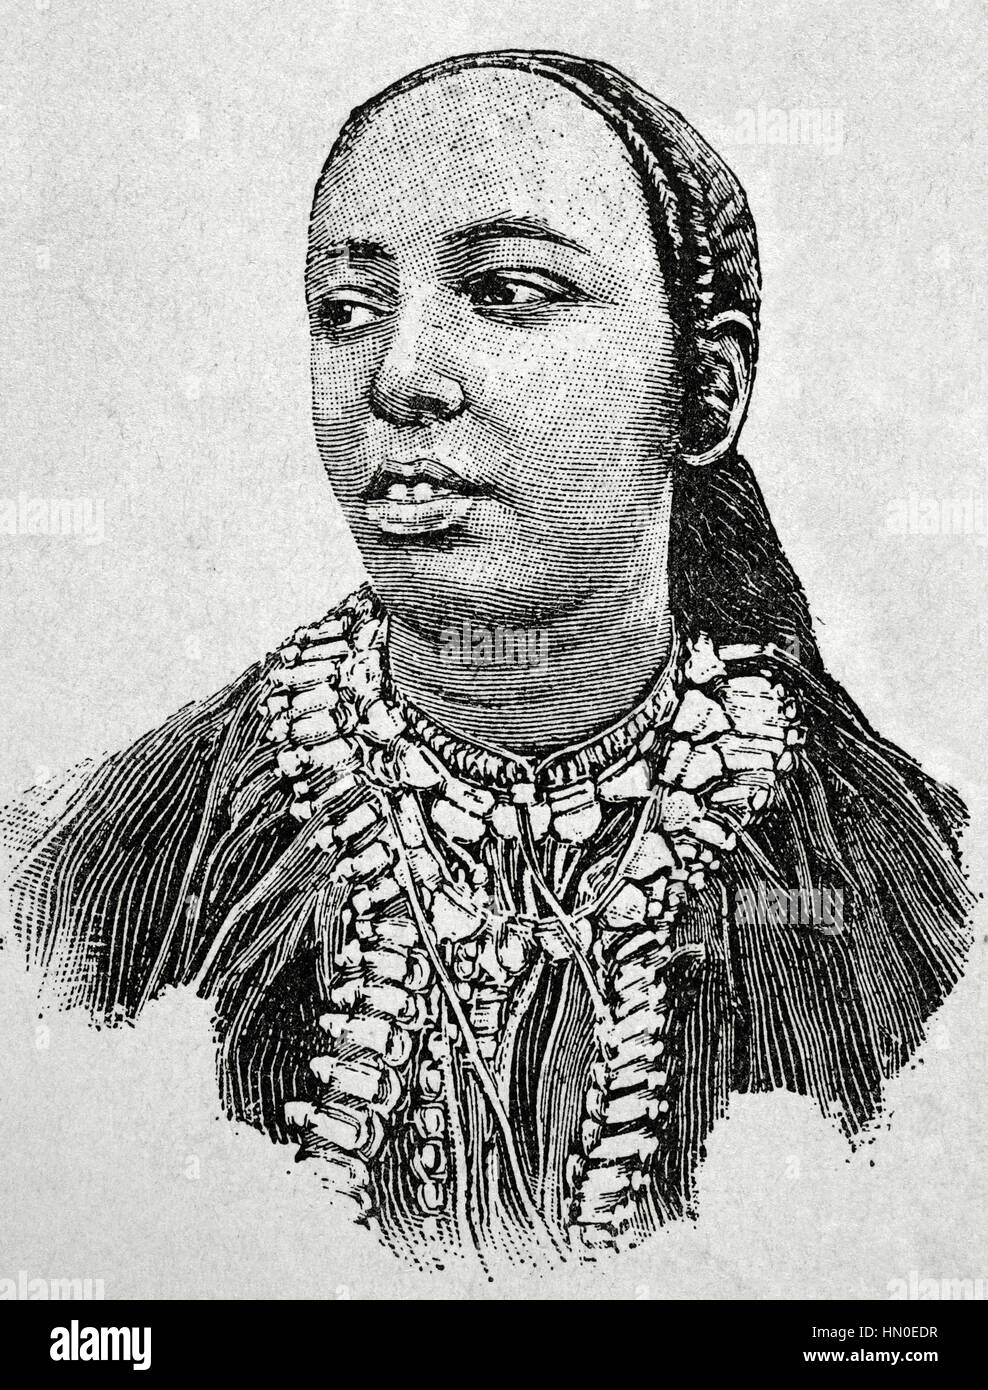 Taytu Betul (1851-1918). Empress Consort of the Ethiopian Empire (1889-1913) and the third wife of Emperor Menelik II of Ethiopia. Portrait. Engraving. 'La Ilustracion Artistica', 1896. Stock Photo